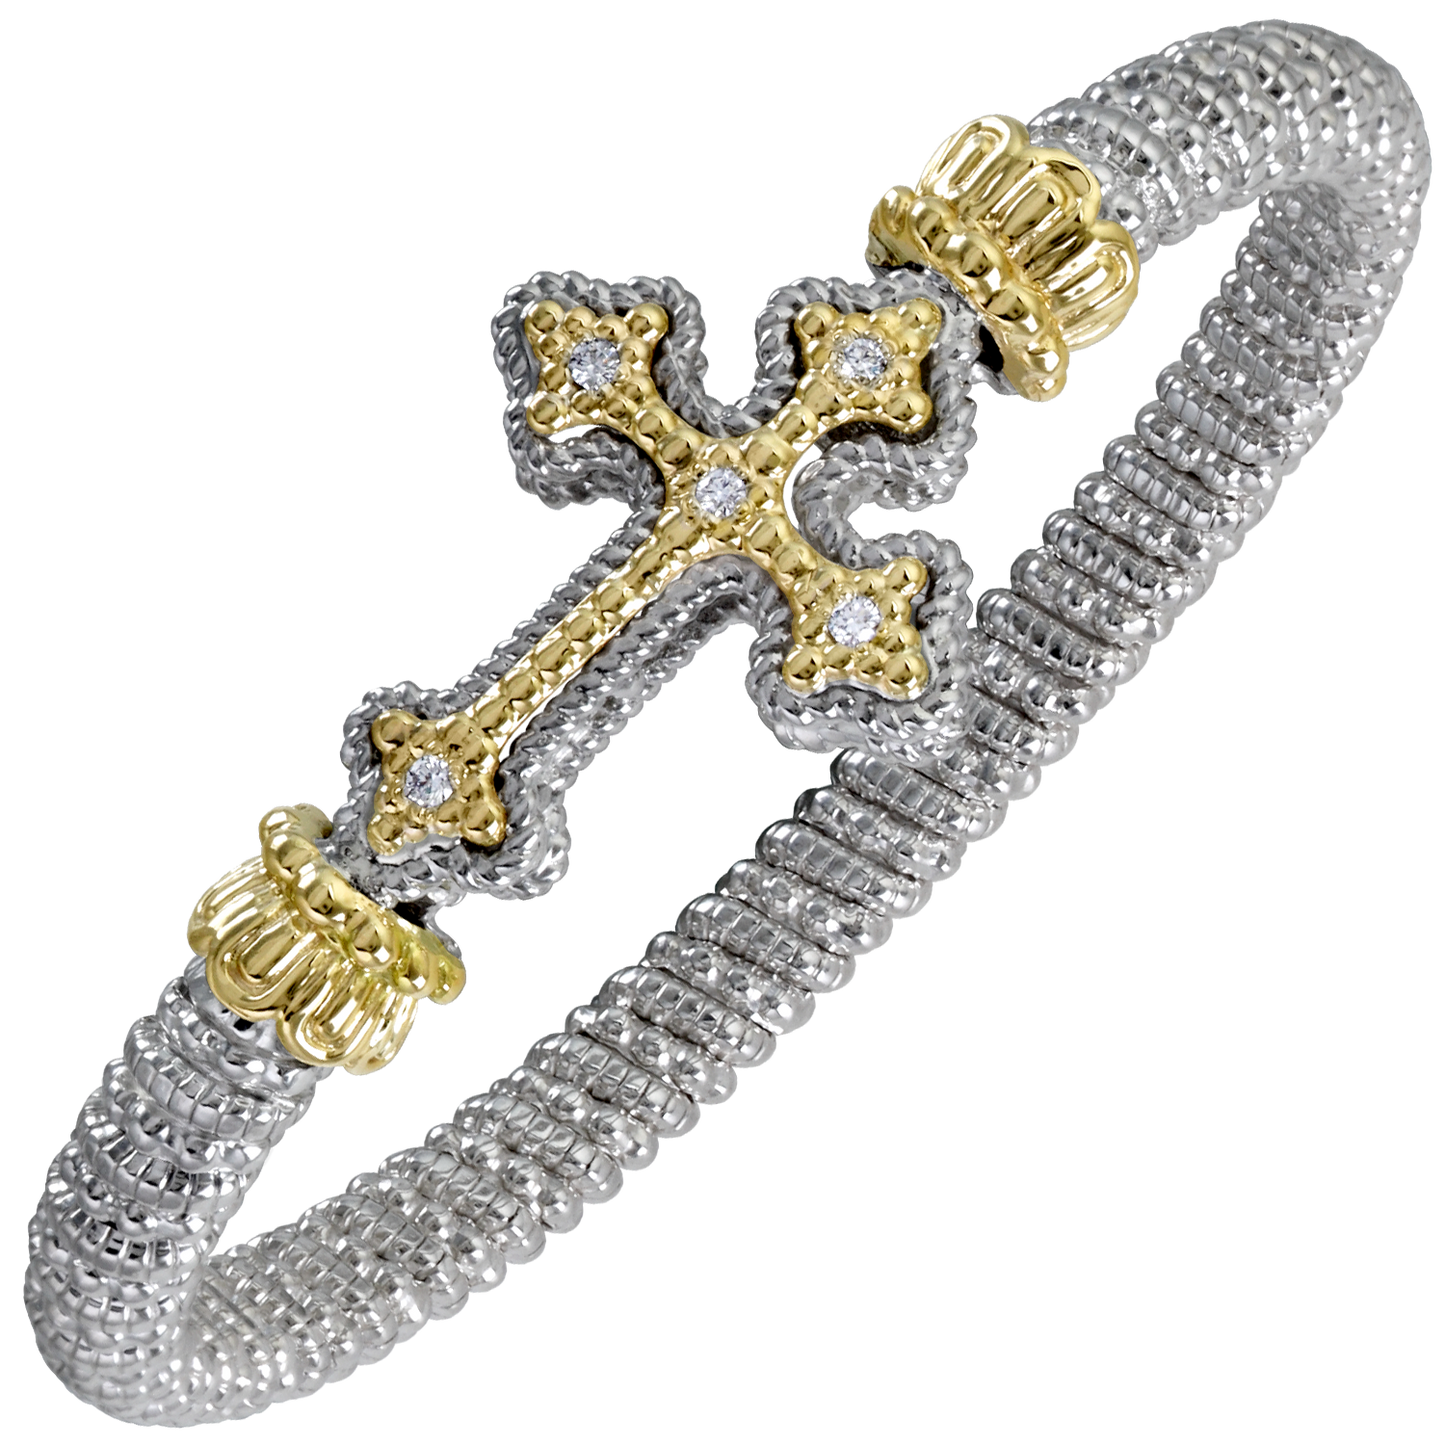 Buy VAHAN Sterling Silver & 14K Gold - 0.10cttw Diamonds - 6 mm Width | Shop Avonlea Jewelry only at Avonlea Jewelry.